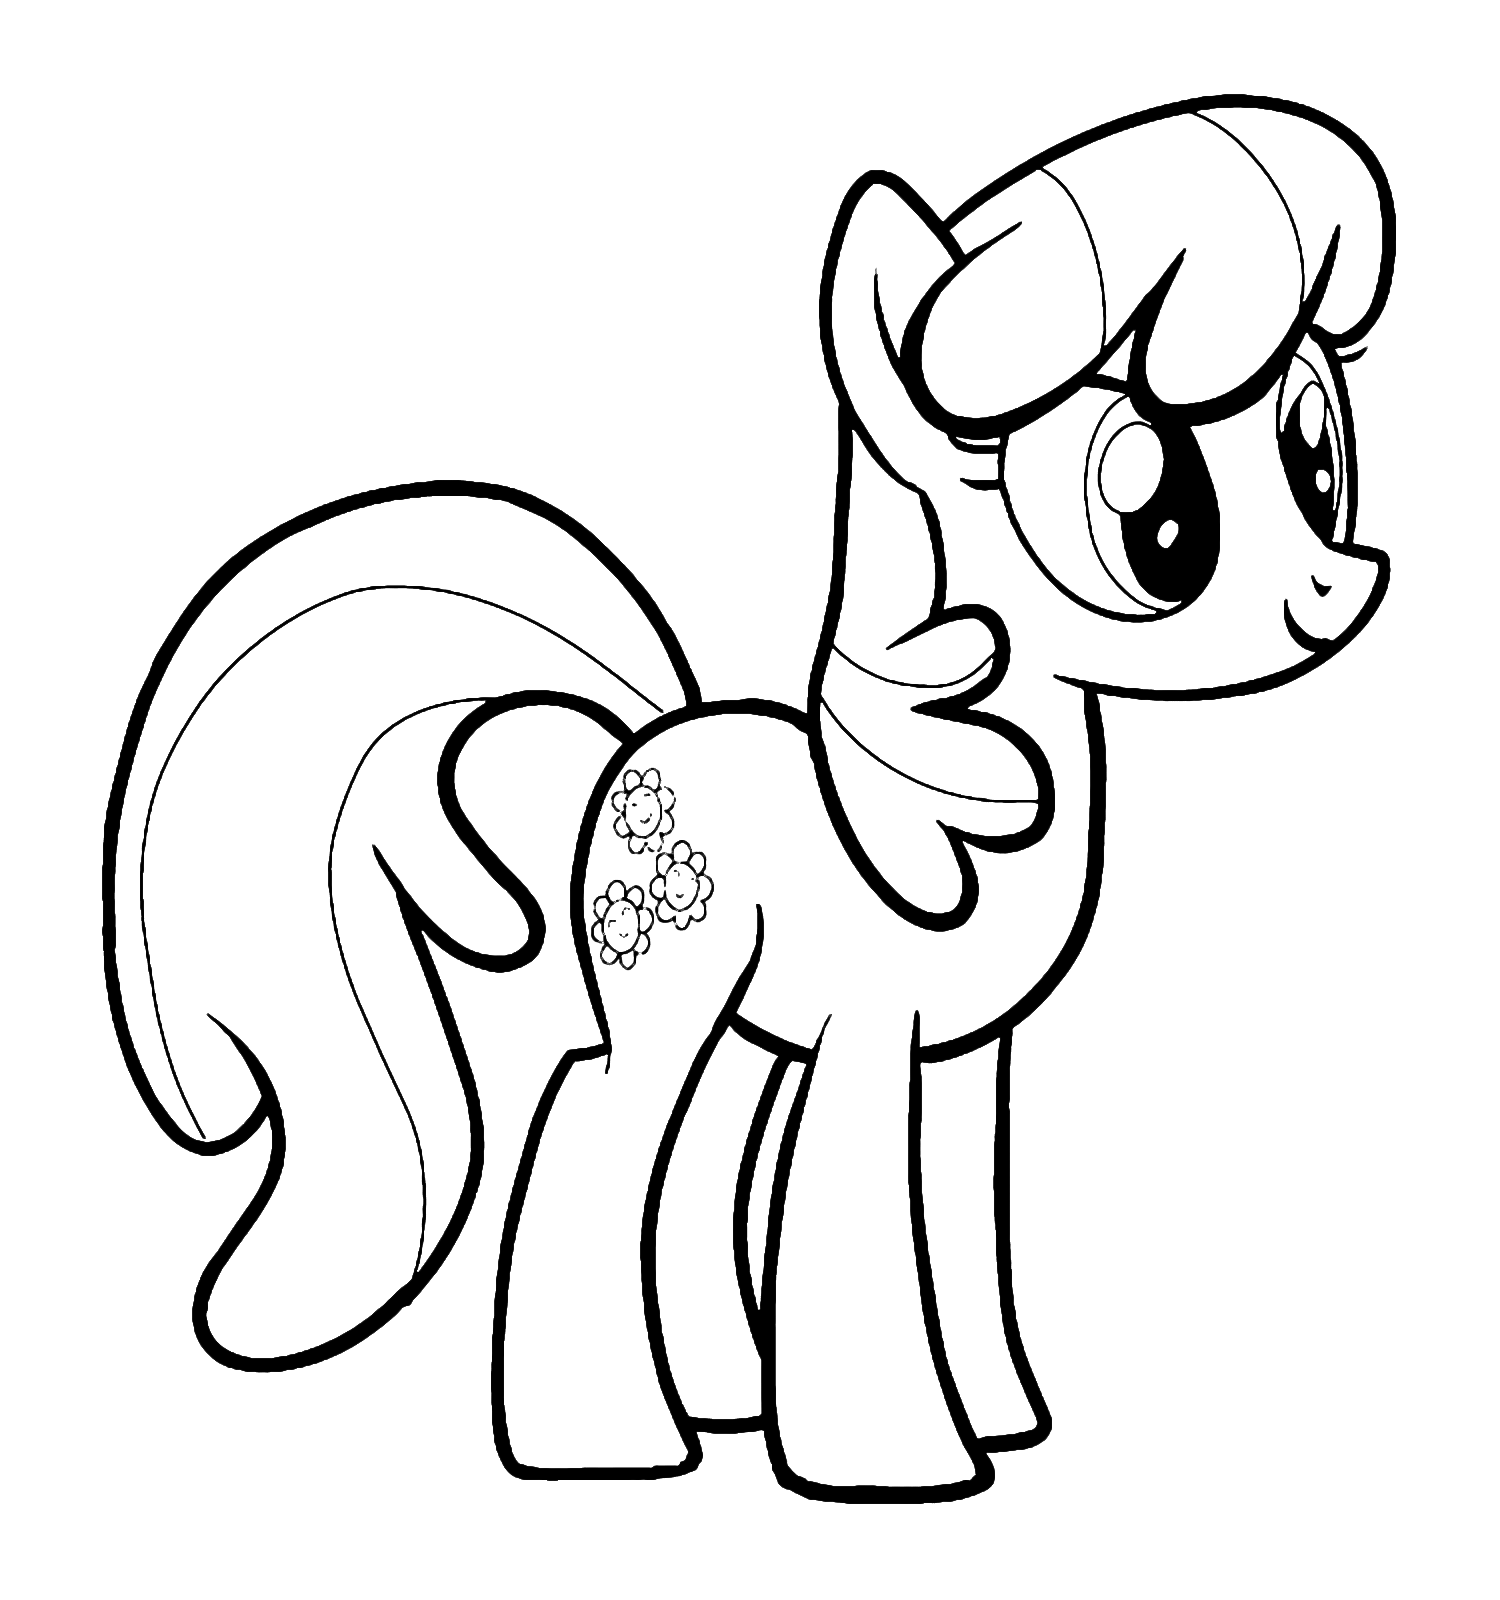 My Little Pony - Miss Cheerilee loves to teach